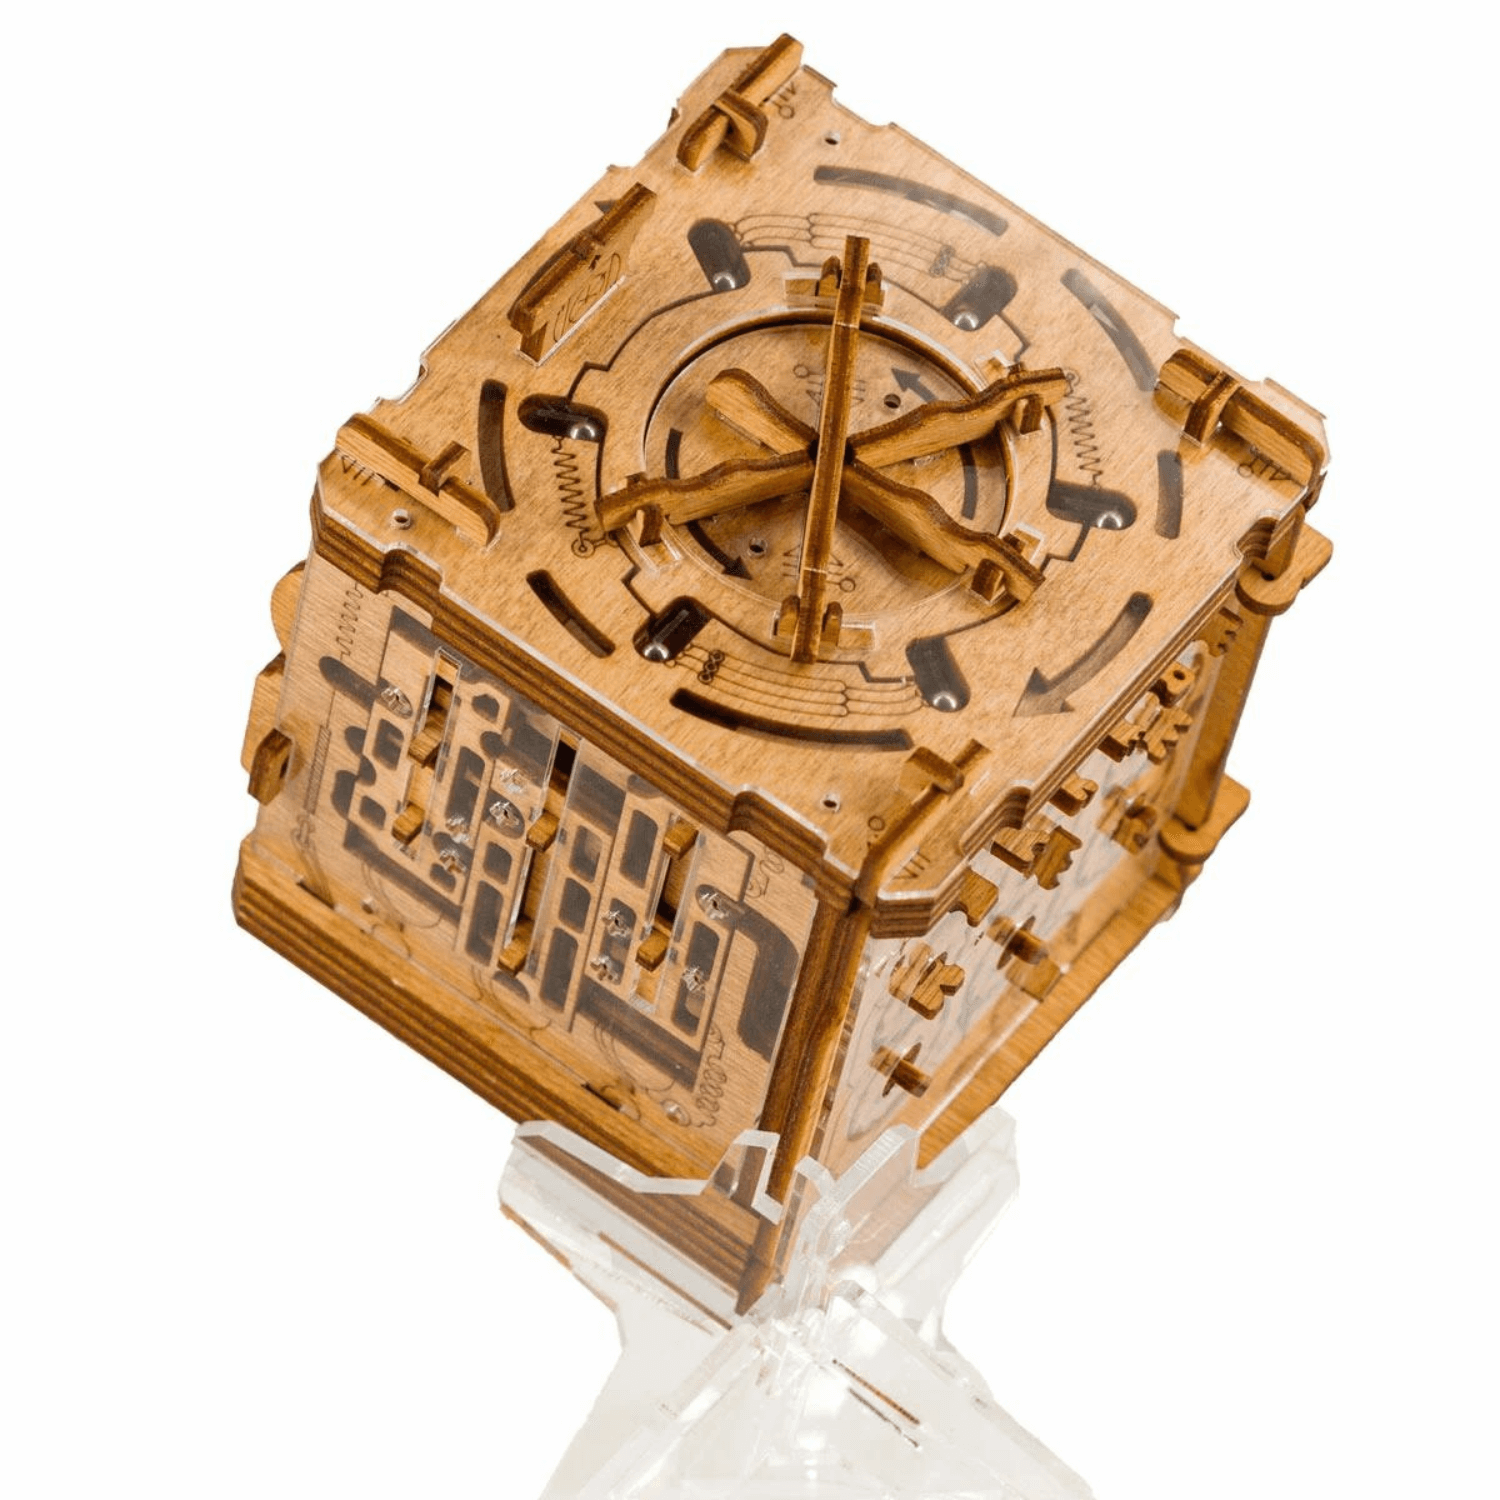 Cluebox: Cambridge Labyrinth - Escape Room in a box, Wooden Puzzle Boxes